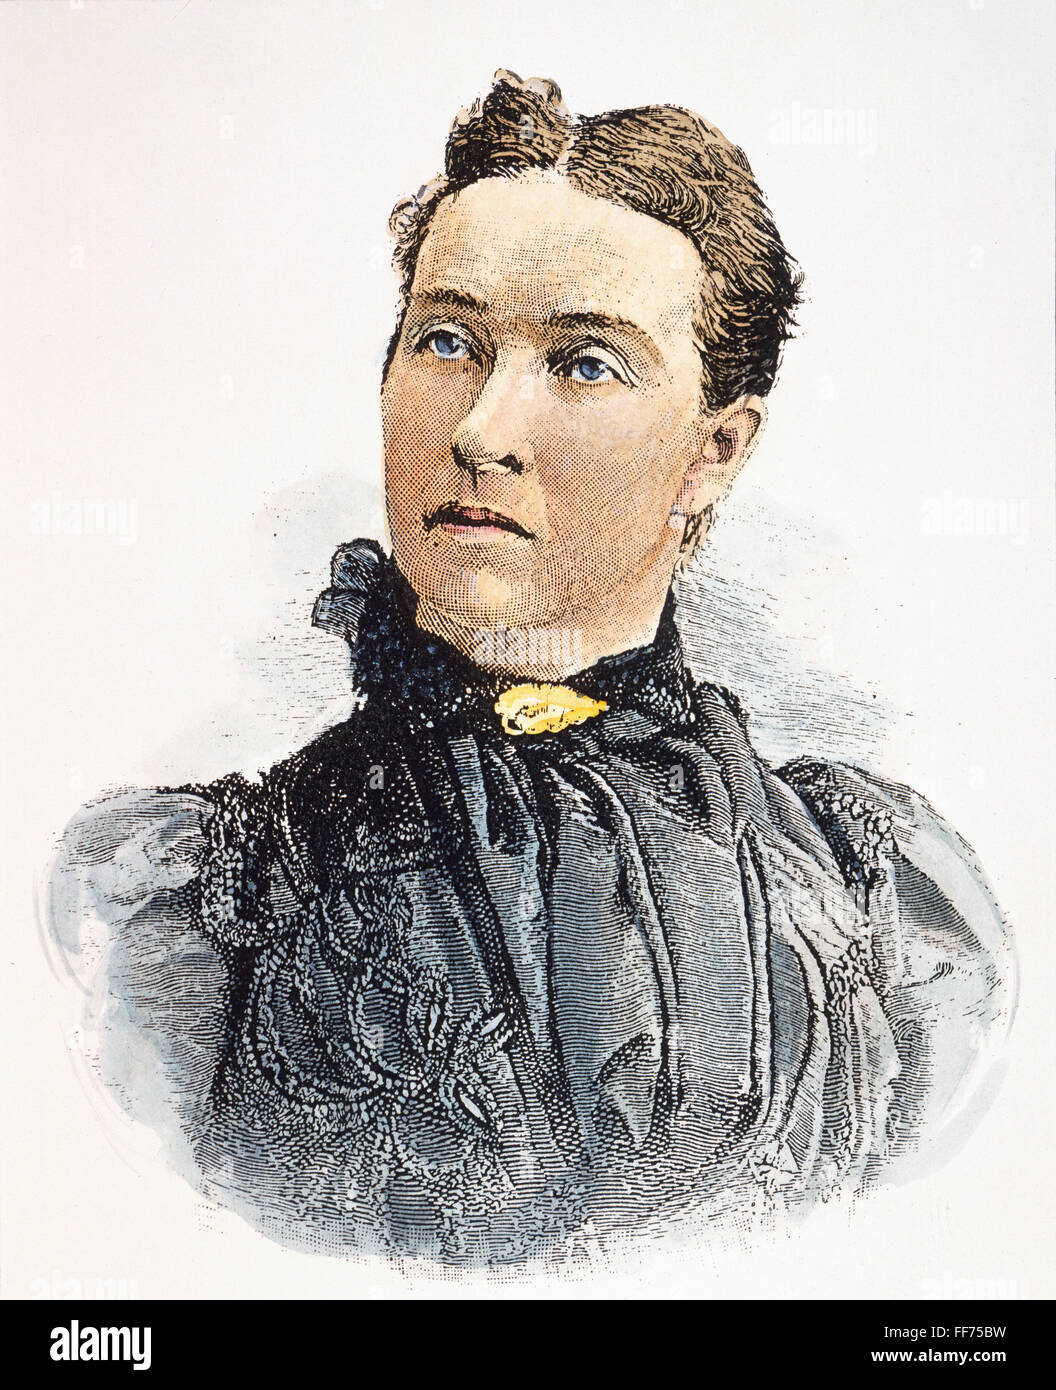 MARY ELIZABETH LEASE /n(1853-1933). American reformer. Color engraving, c1890. Stock Photo